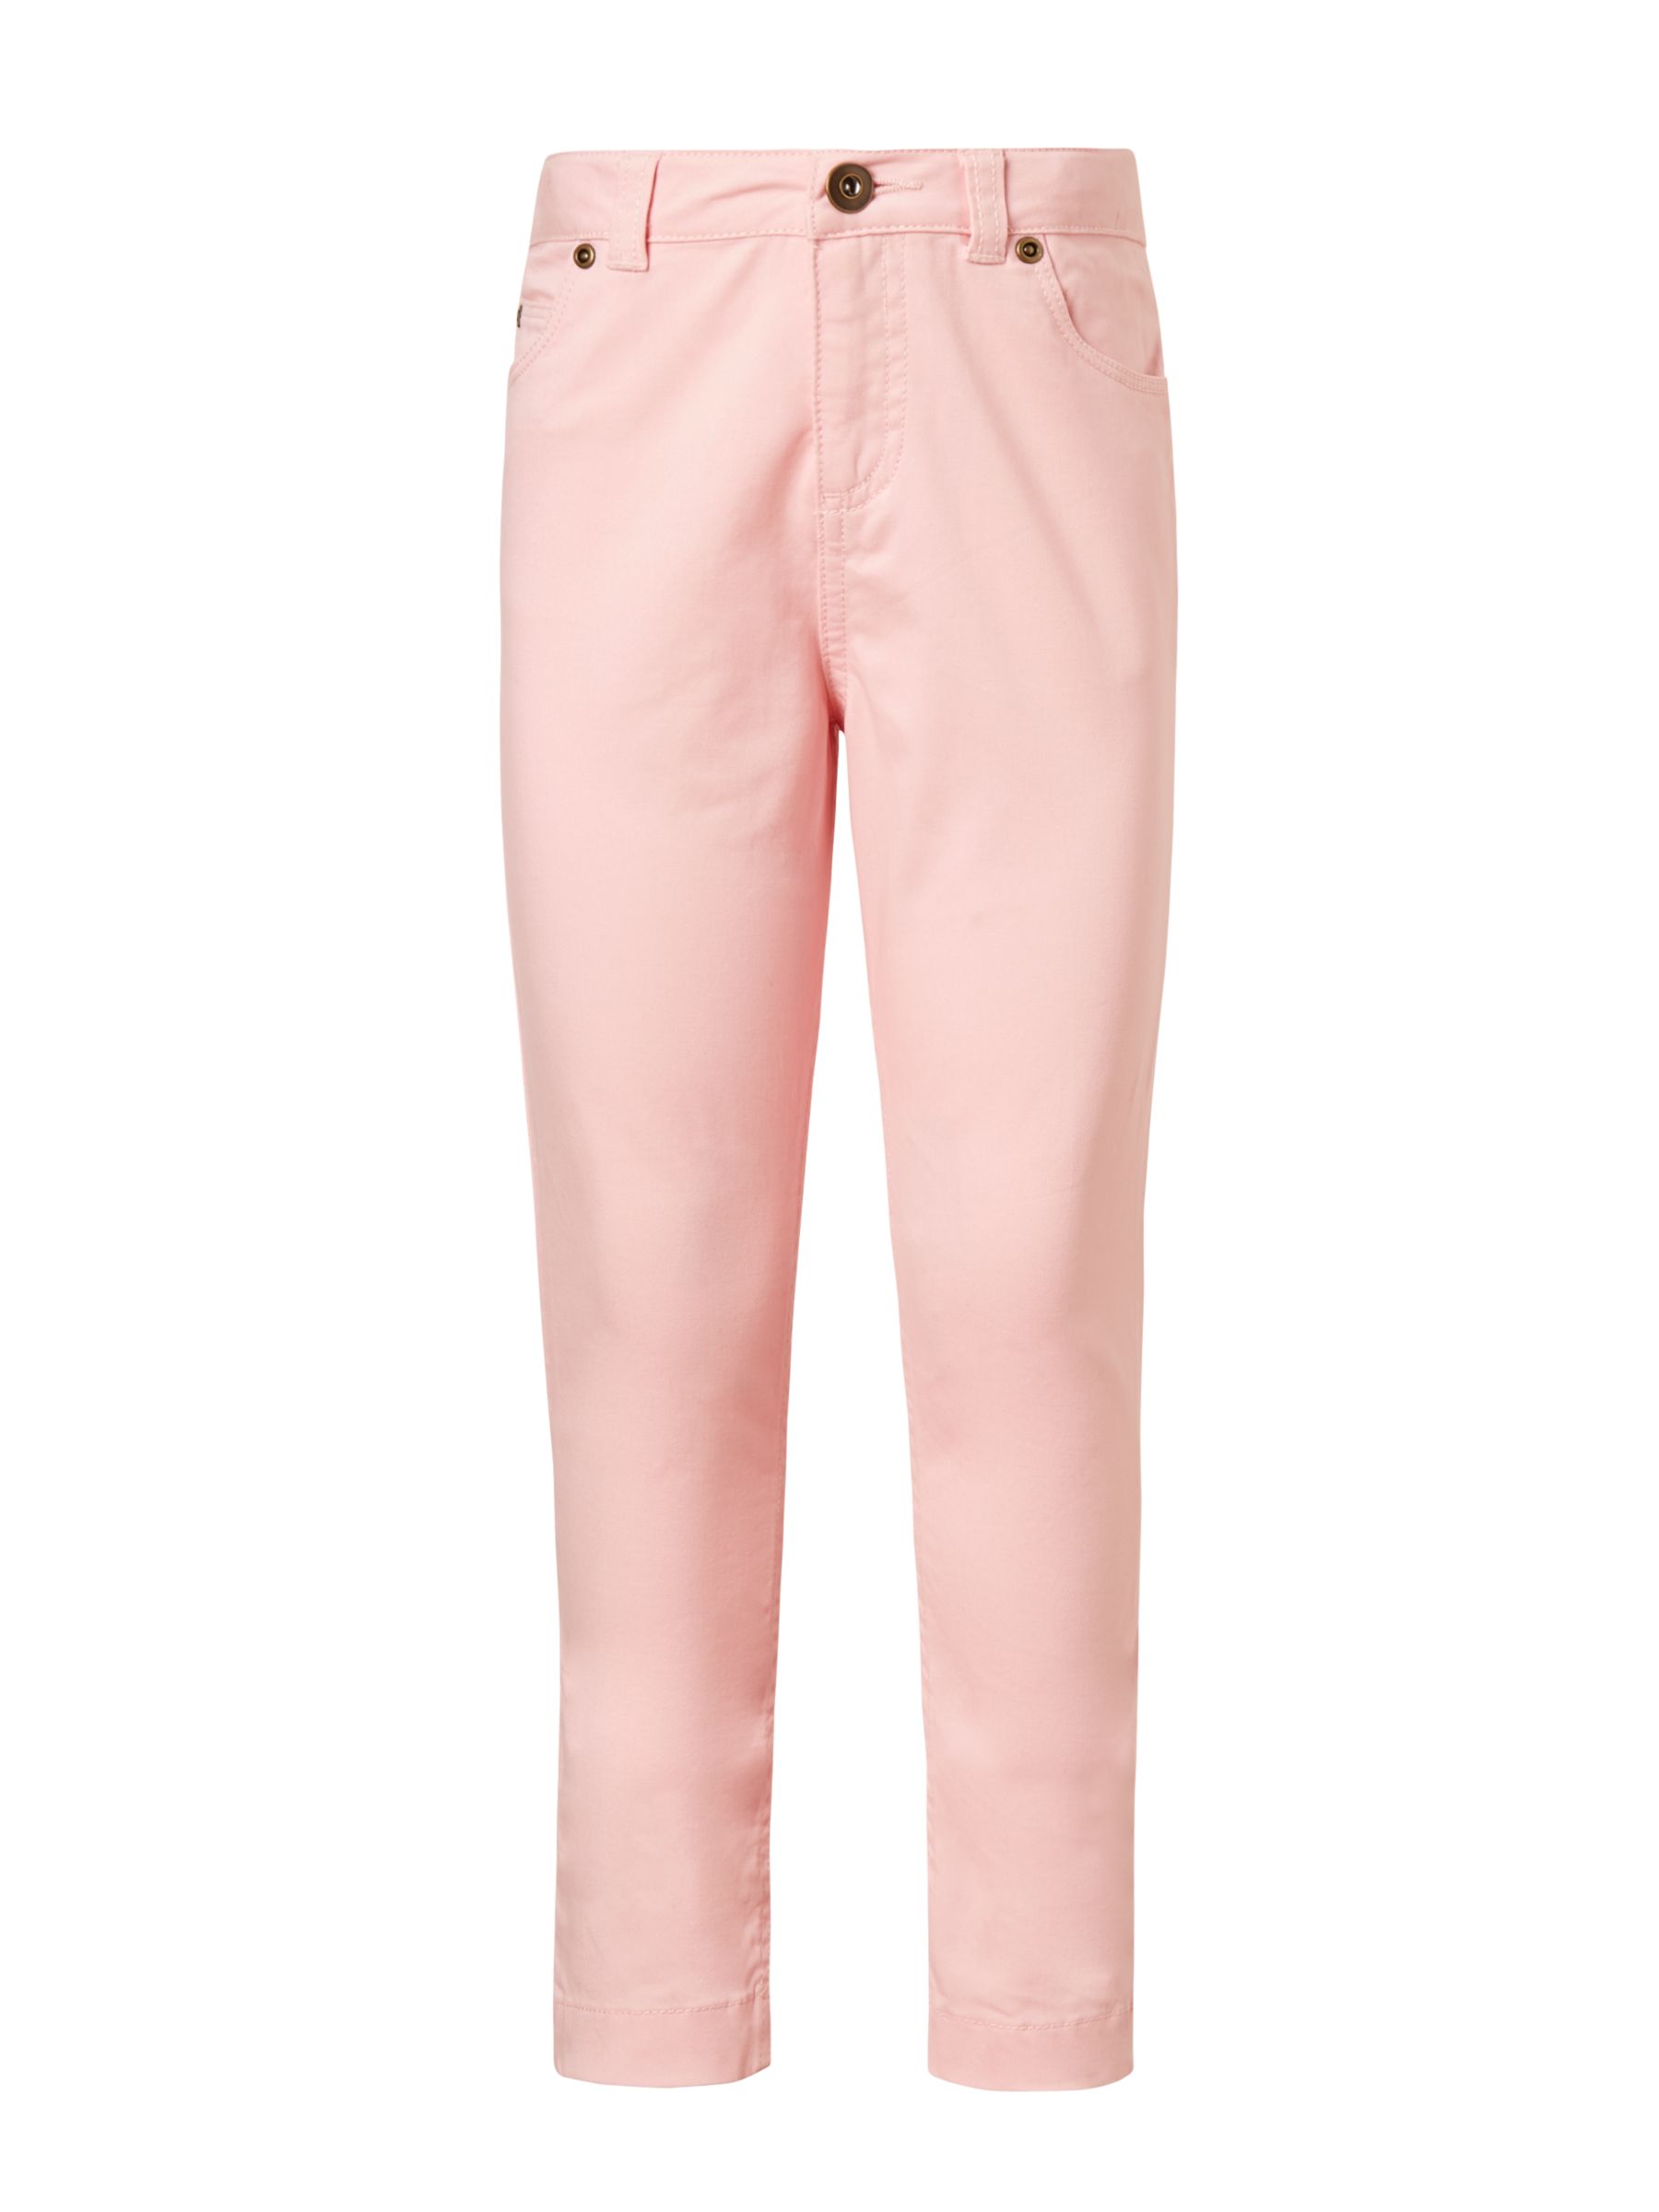 John Lewis & Partners Girls' Twill Jeans, Pink